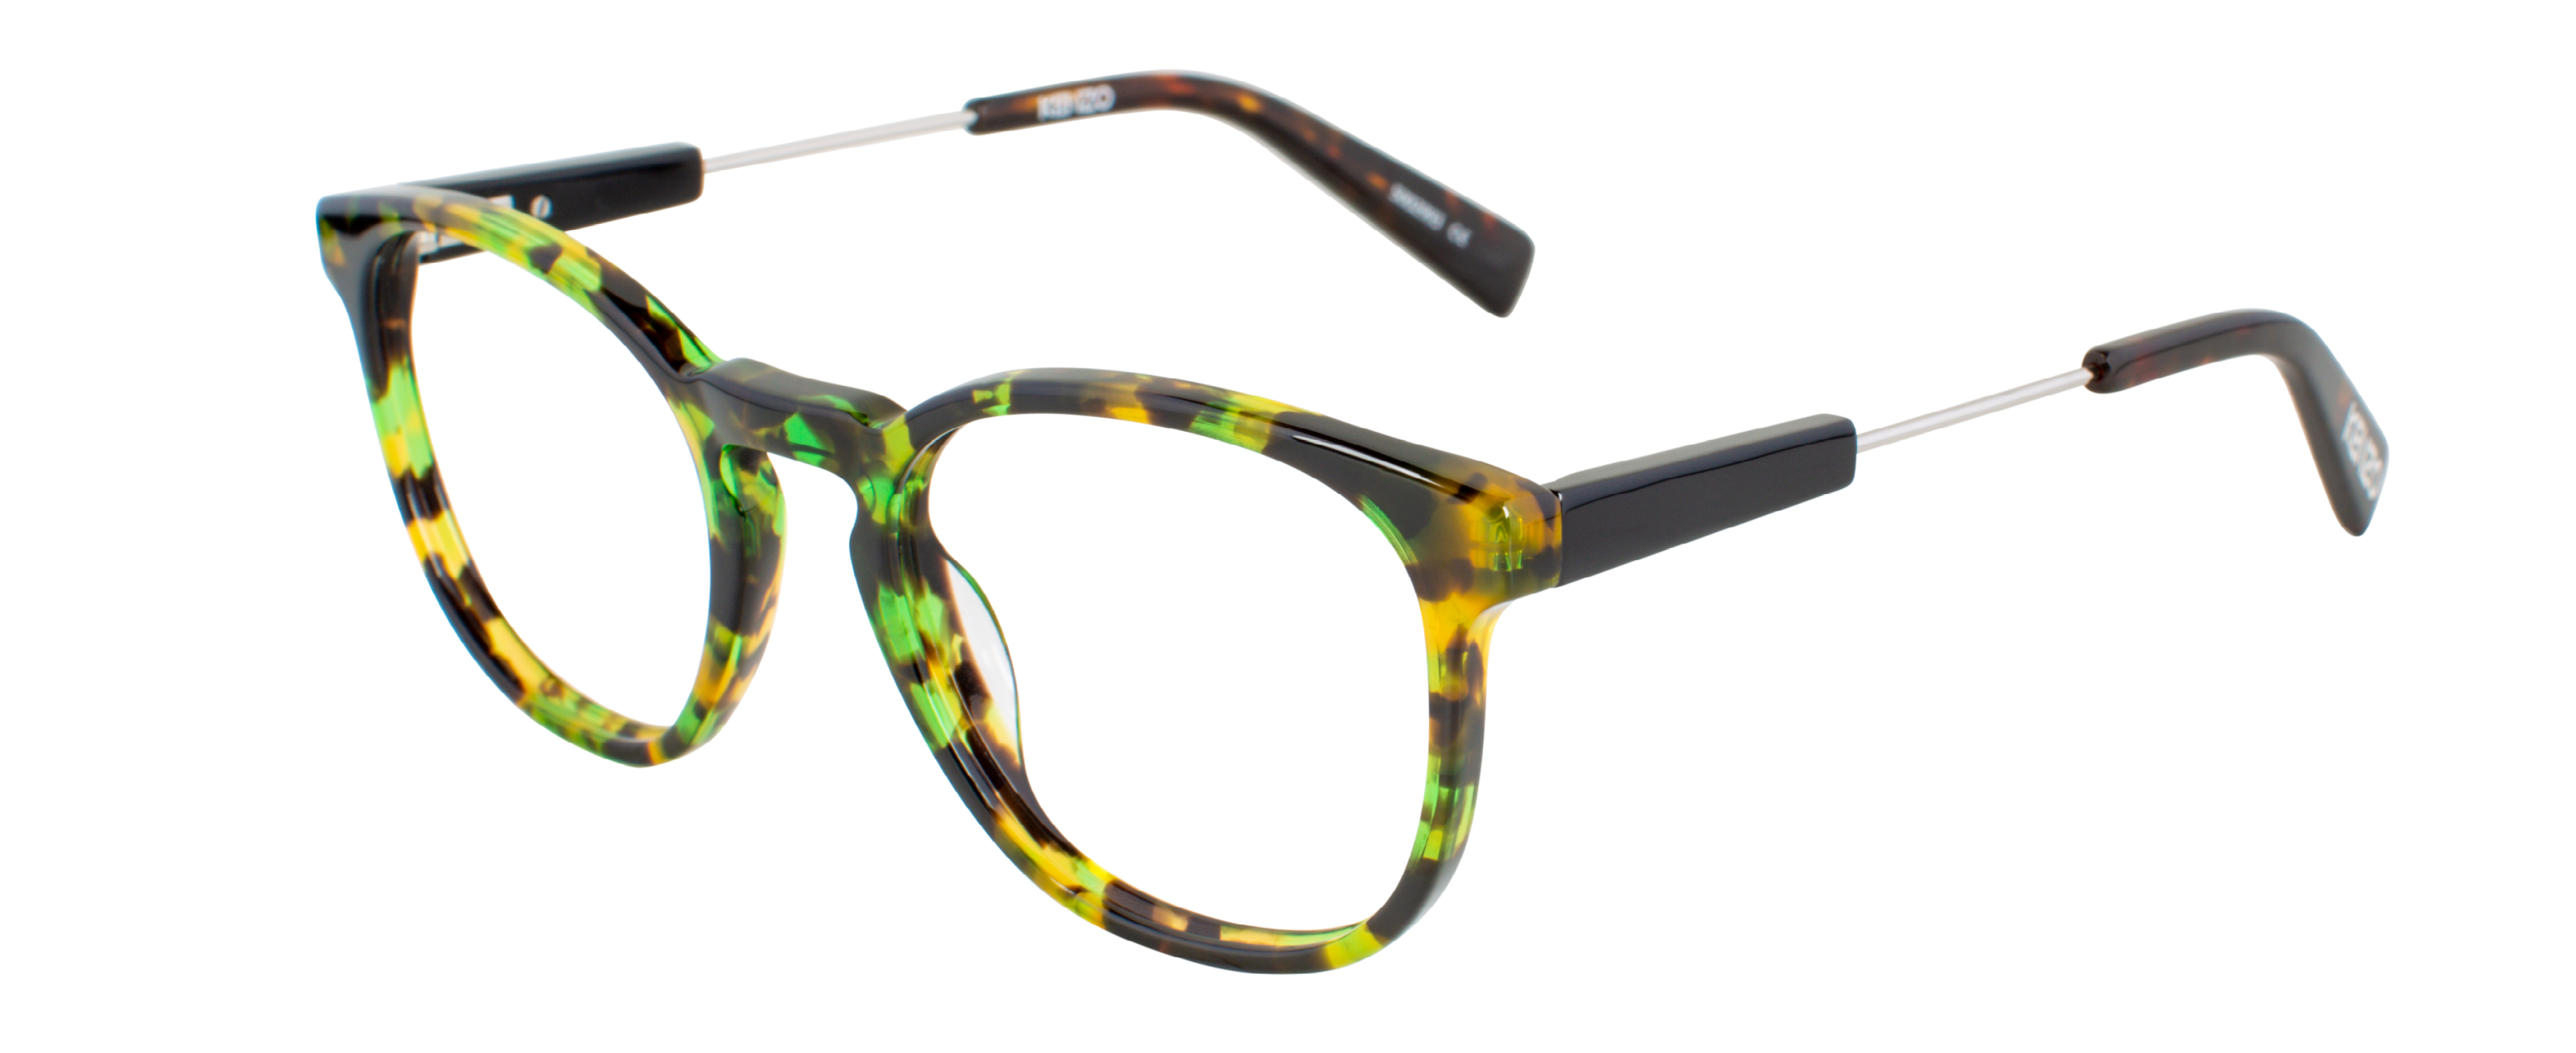 KENZO eyewear – #LoveGlasses